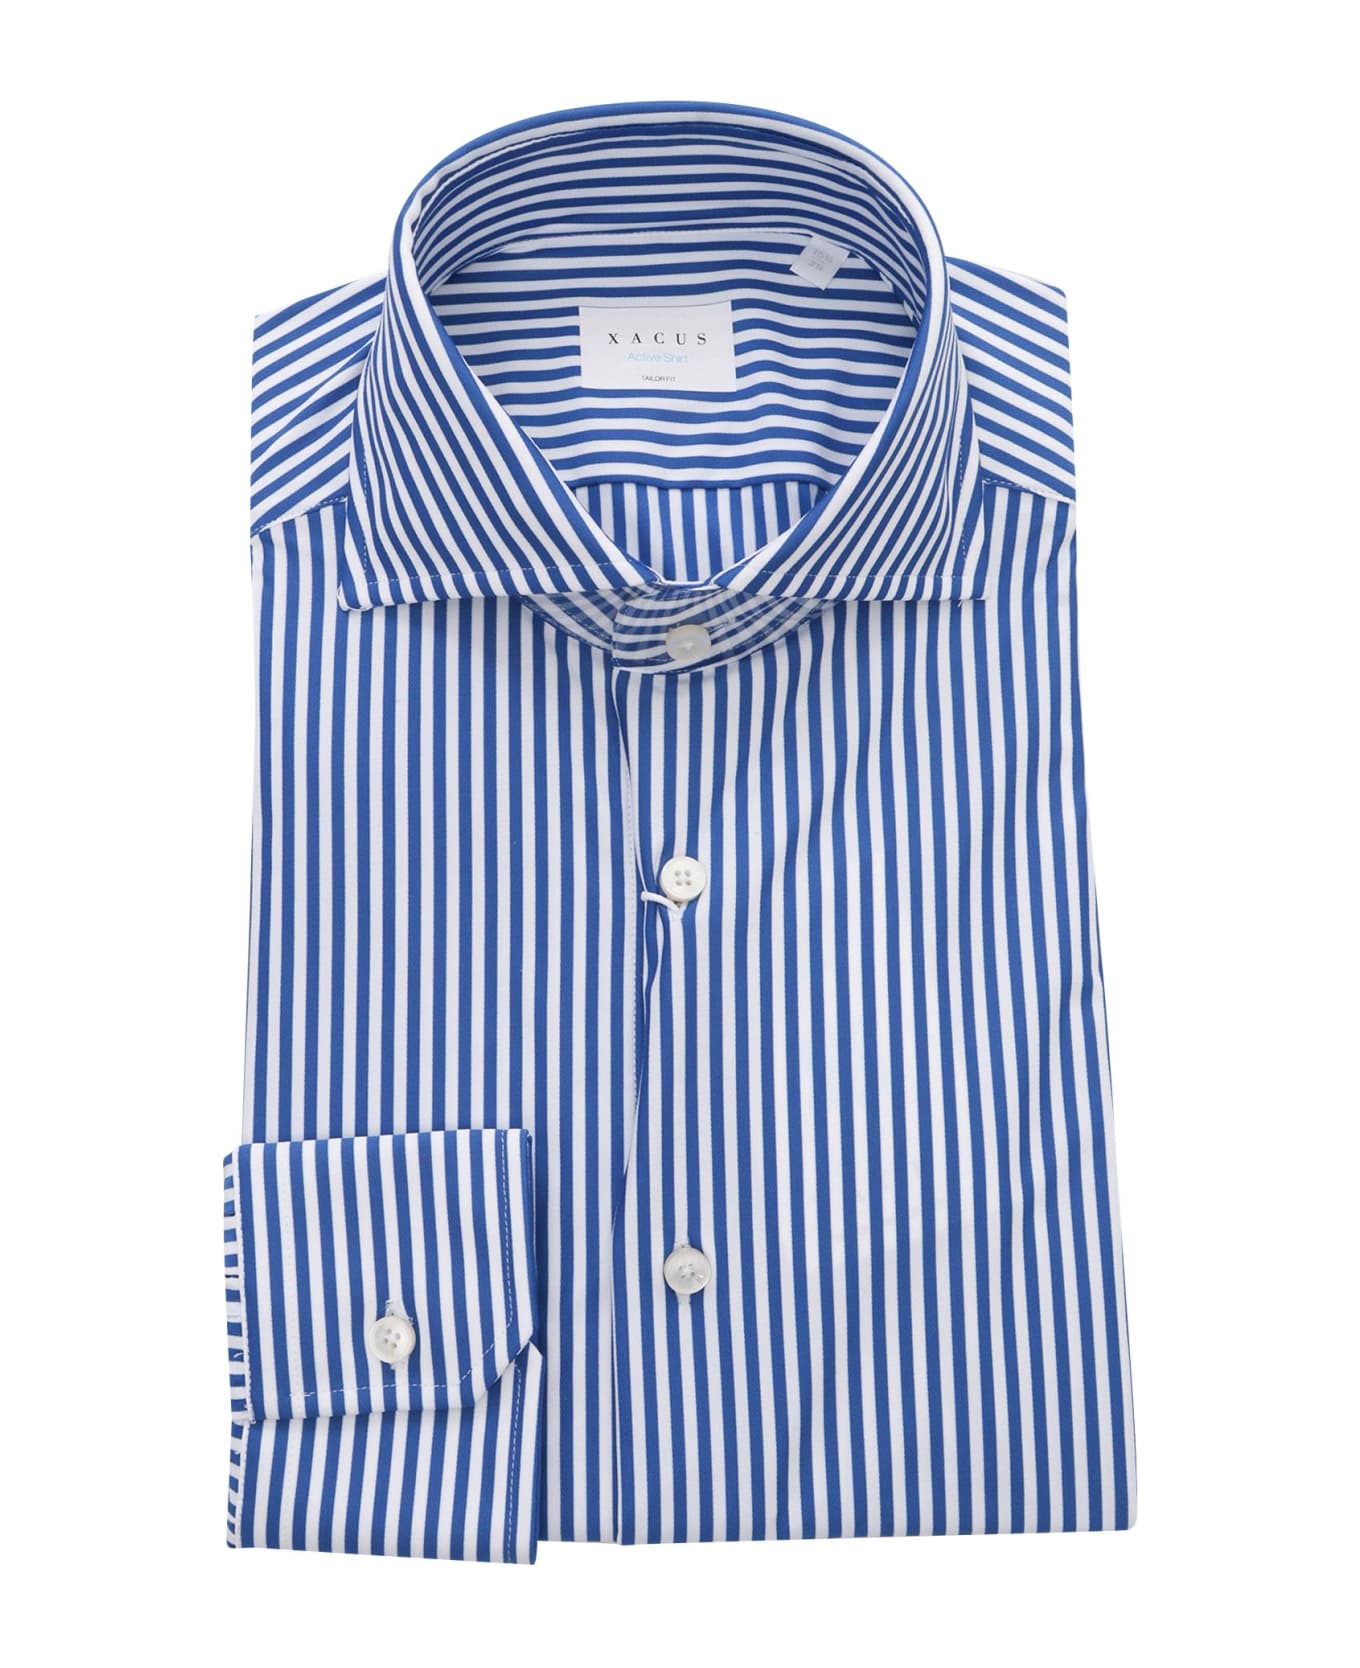 Xacus Blue Striped Shirt - MULTICOLOR